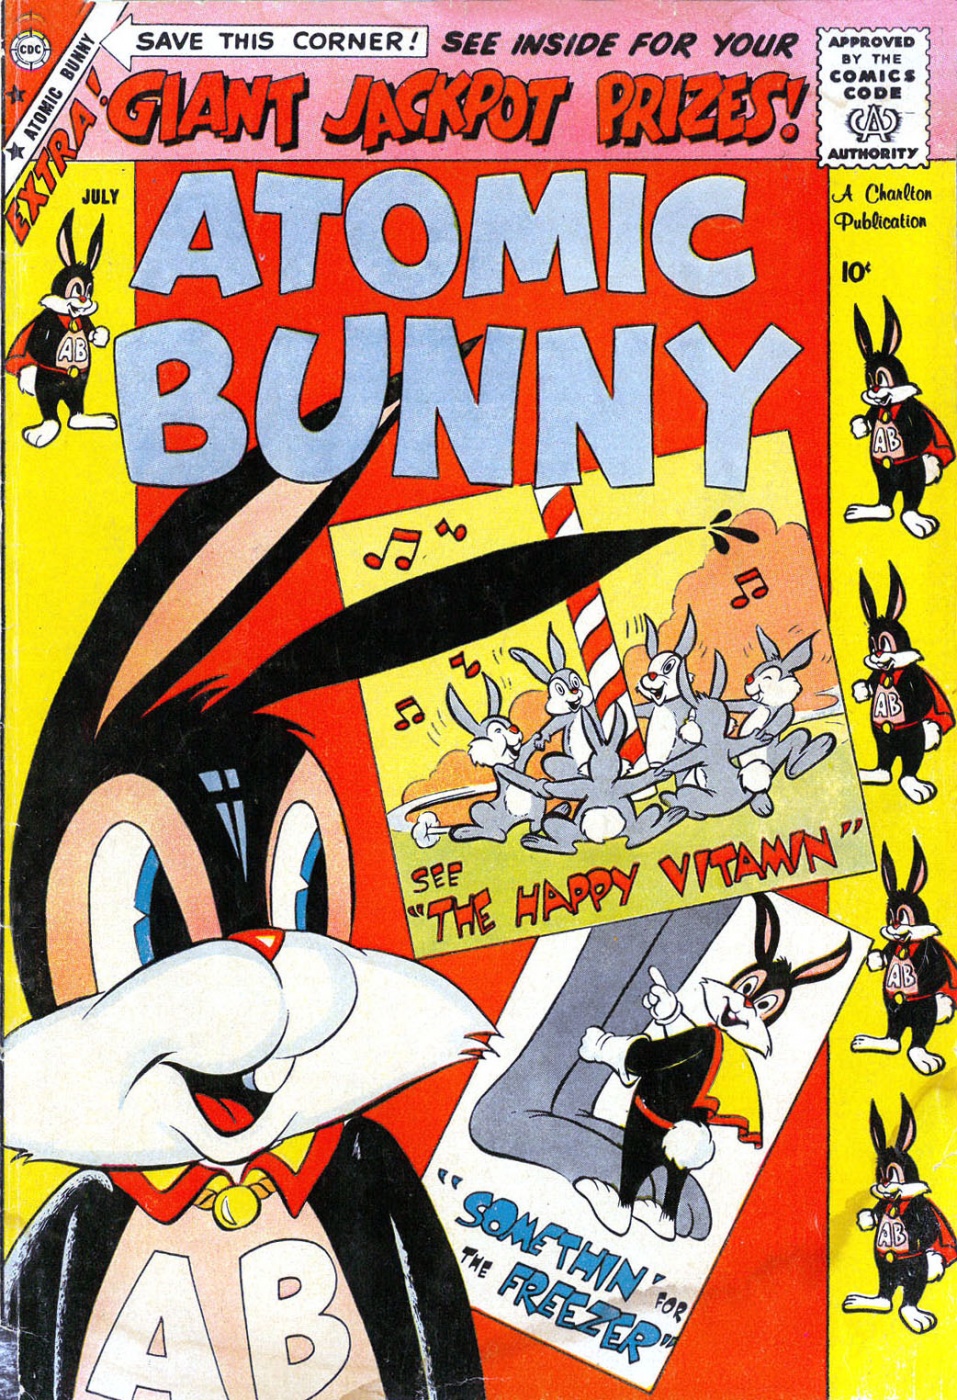 Atomic-Bunny-Comic-Strips (c) (1)